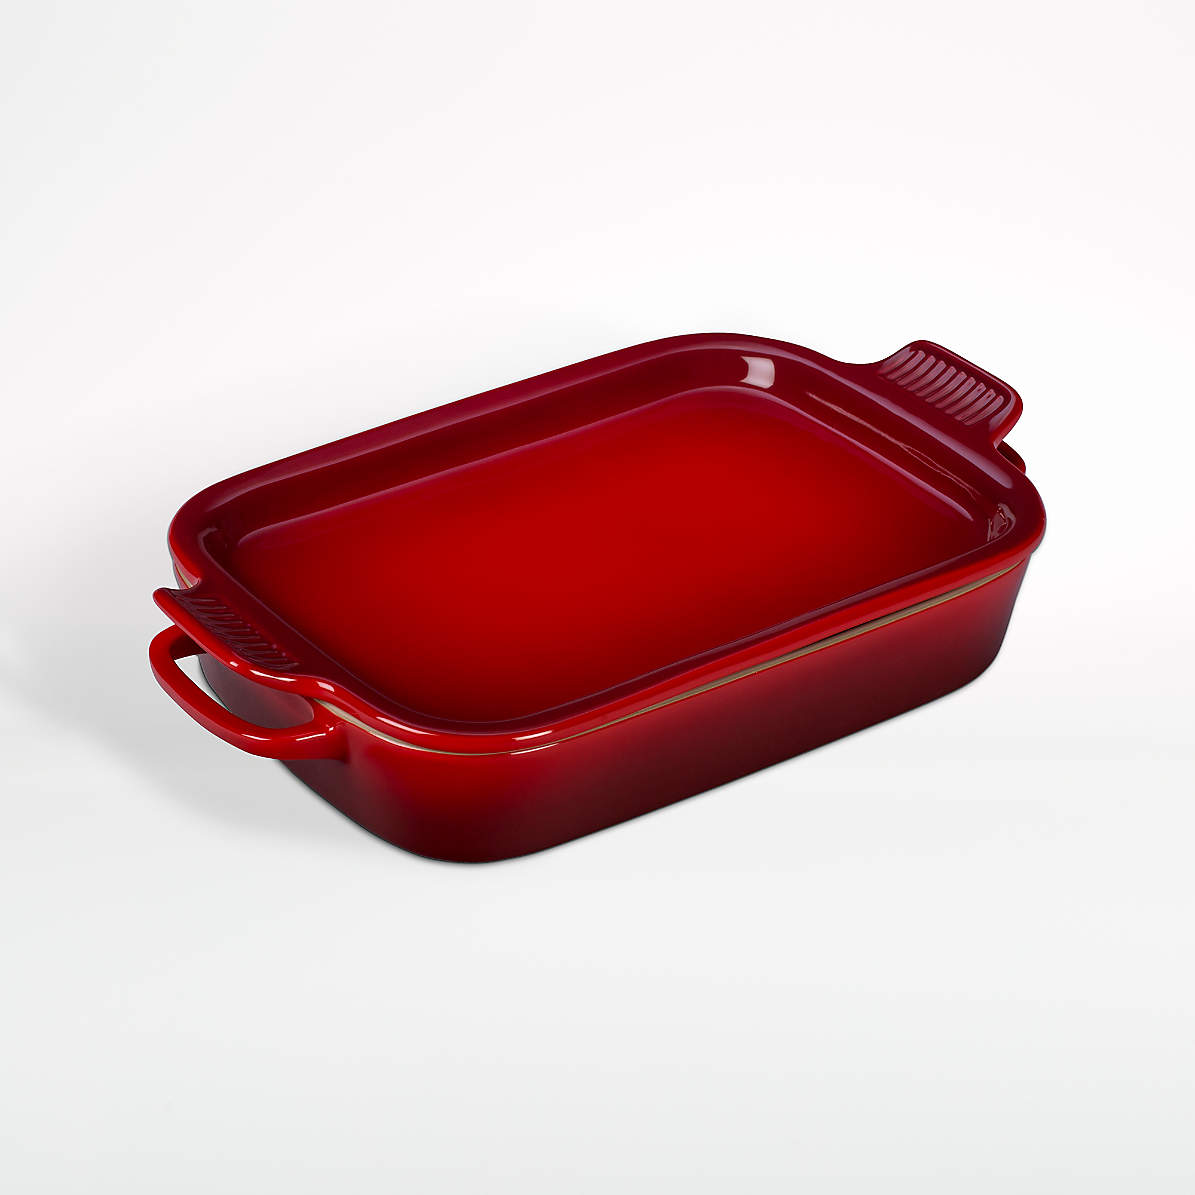 Stillehavsøer sirene når som helst Le Creuset Covered Rectangular Cerise Red Ceramic Baking Dish with Platter  Lid + Reviews | Crate & Barrel